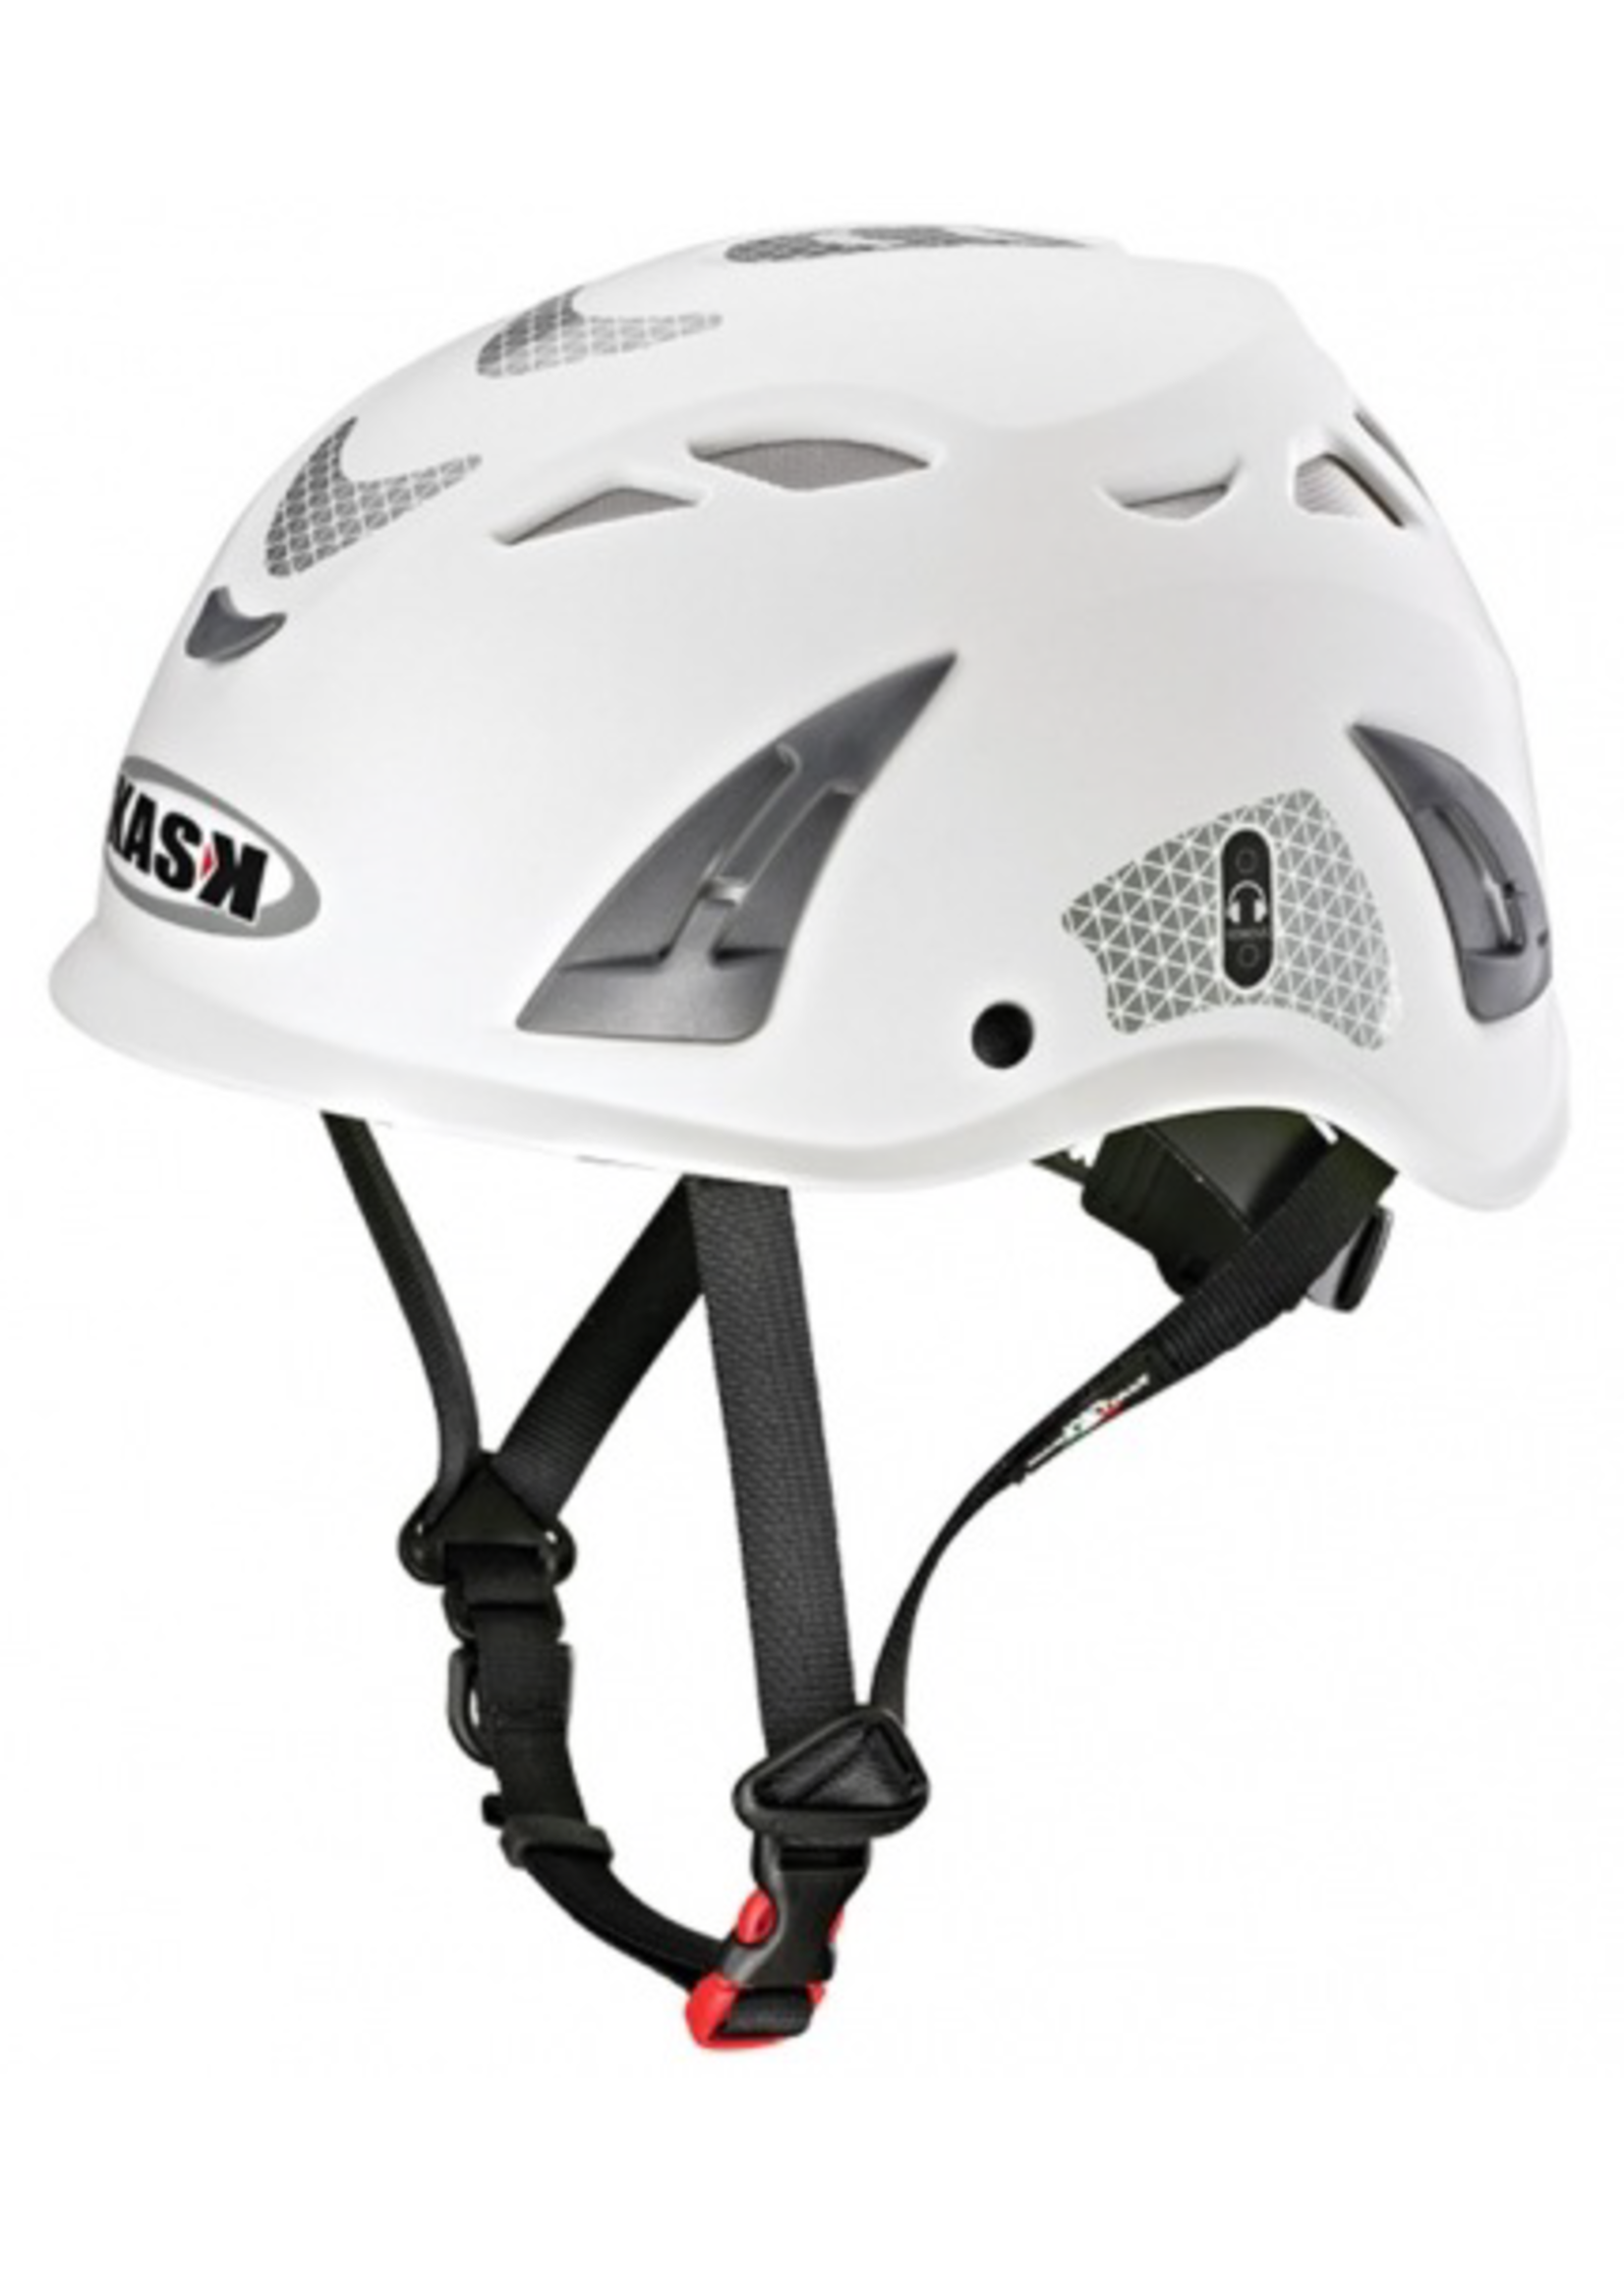 KASK White Hi-Viz Kask Plasma Work Helmet with Adapter For Ear Defenders